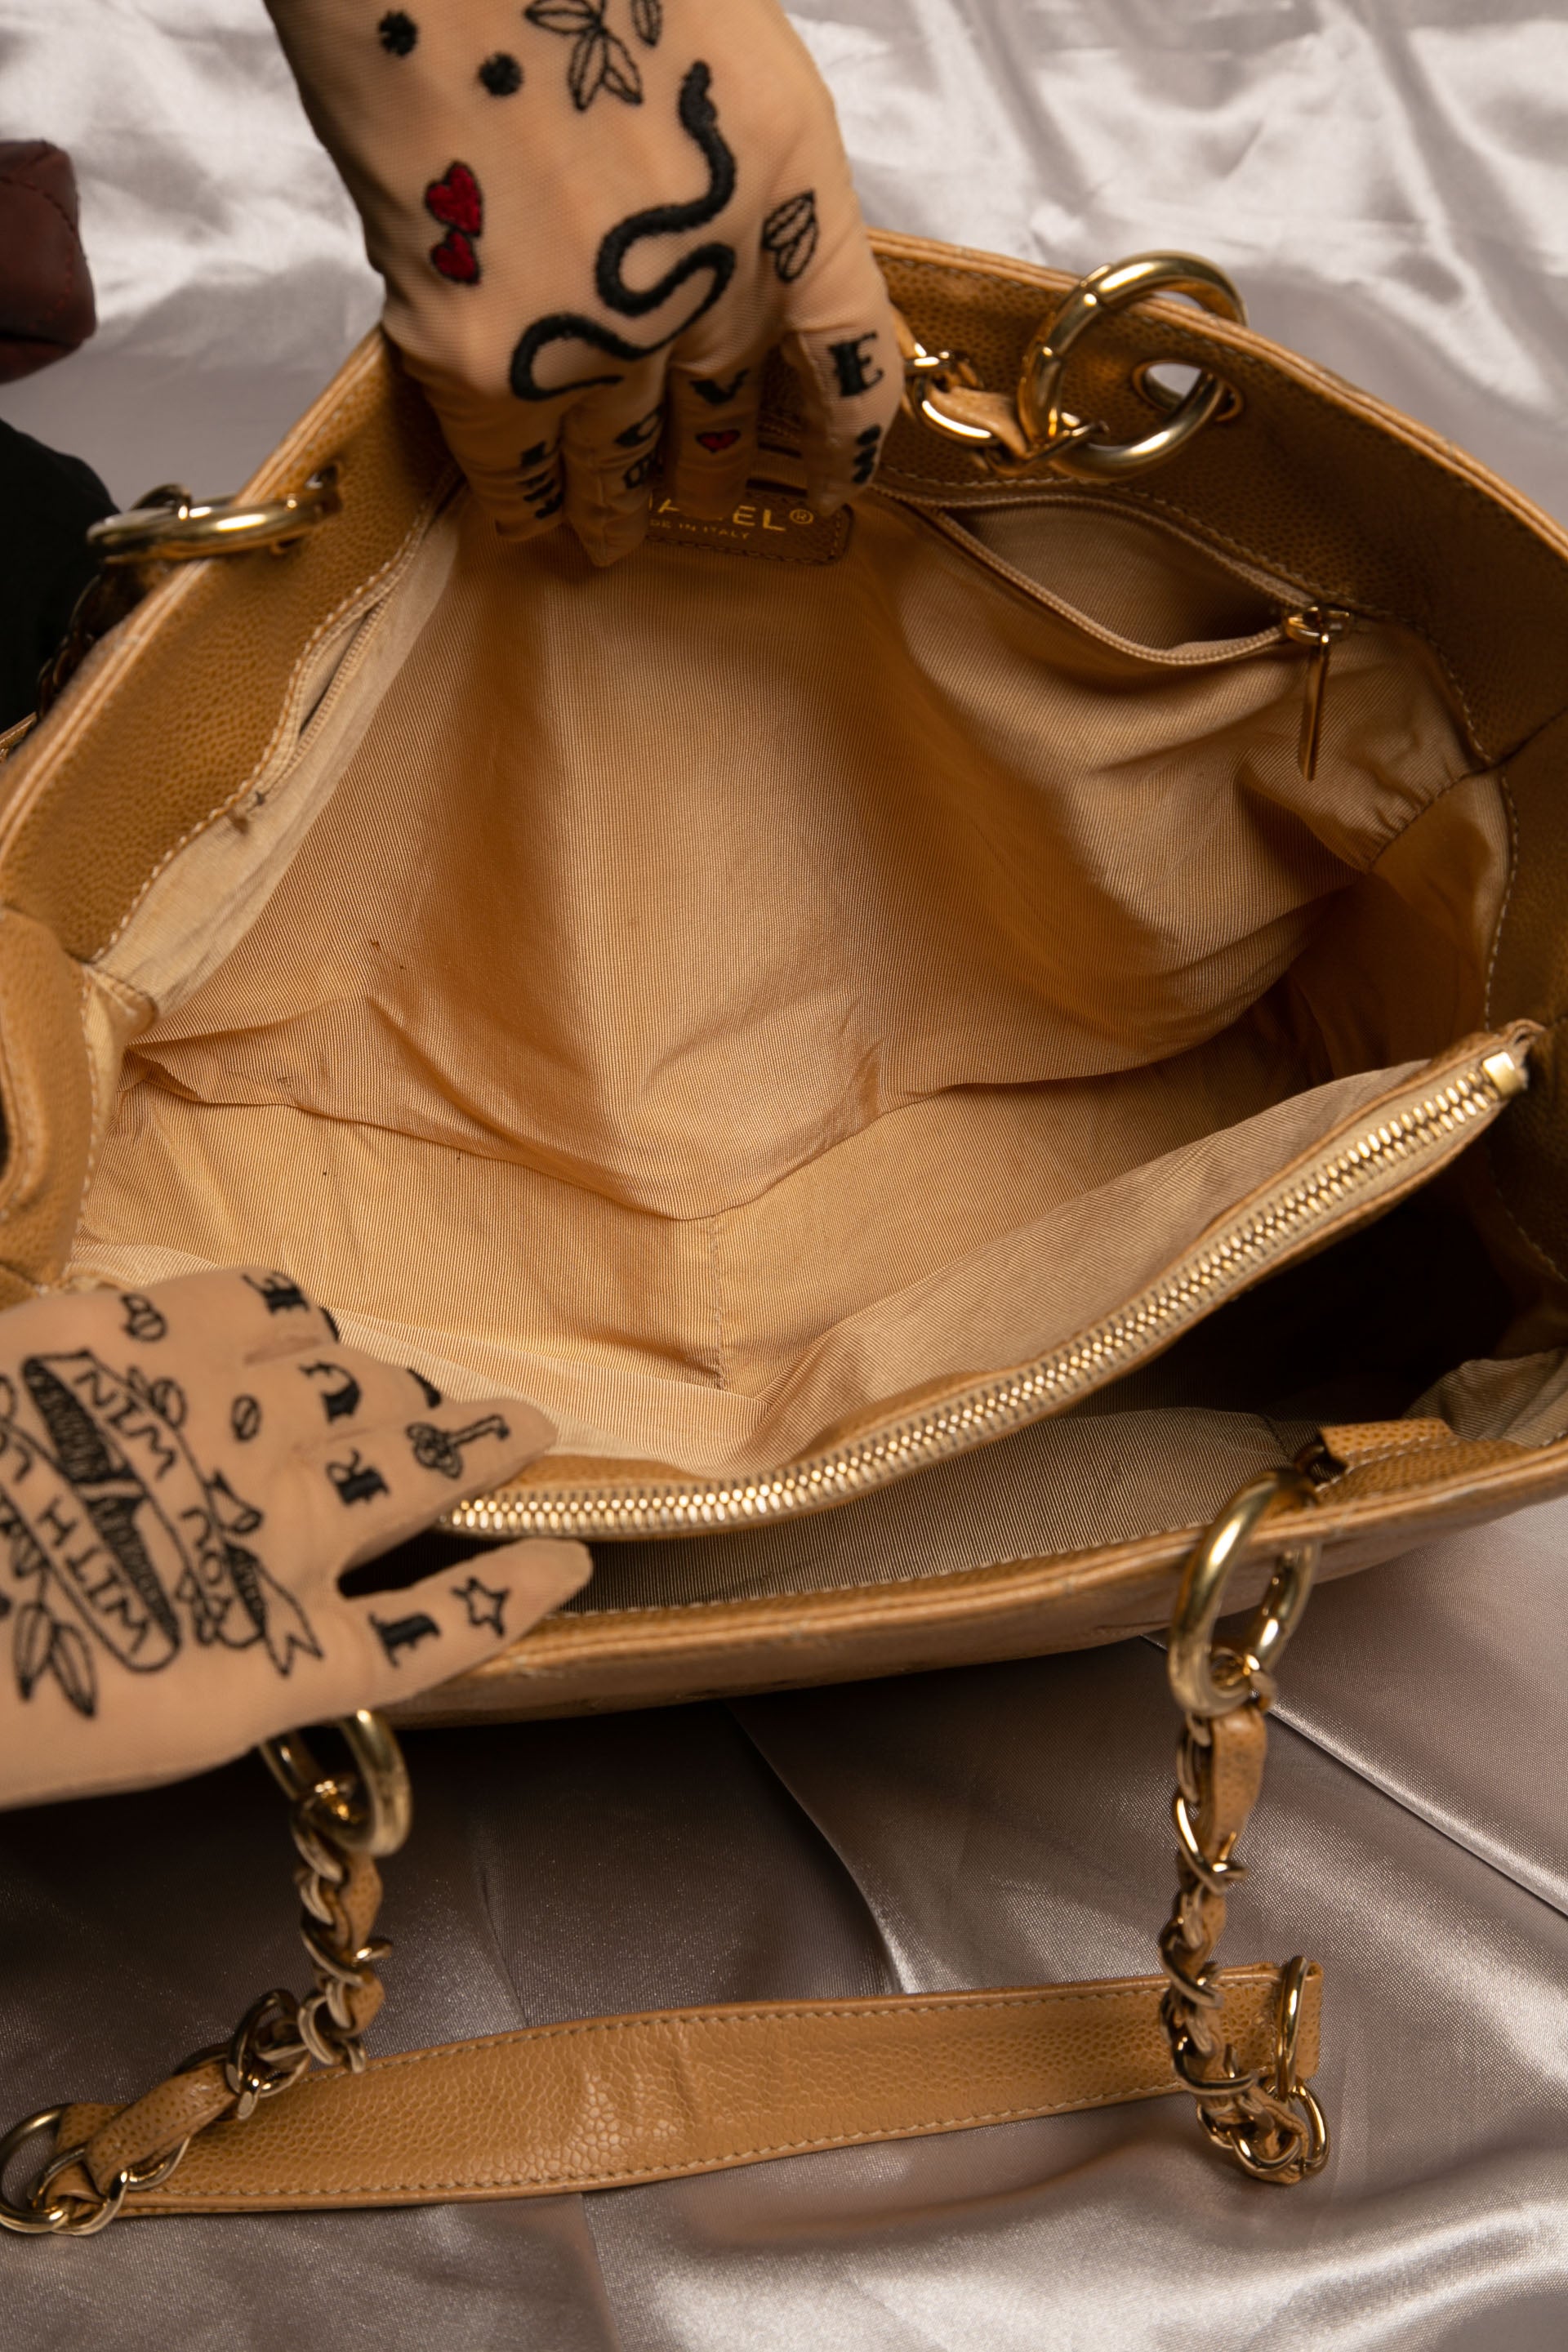 chanel leather tote handbag